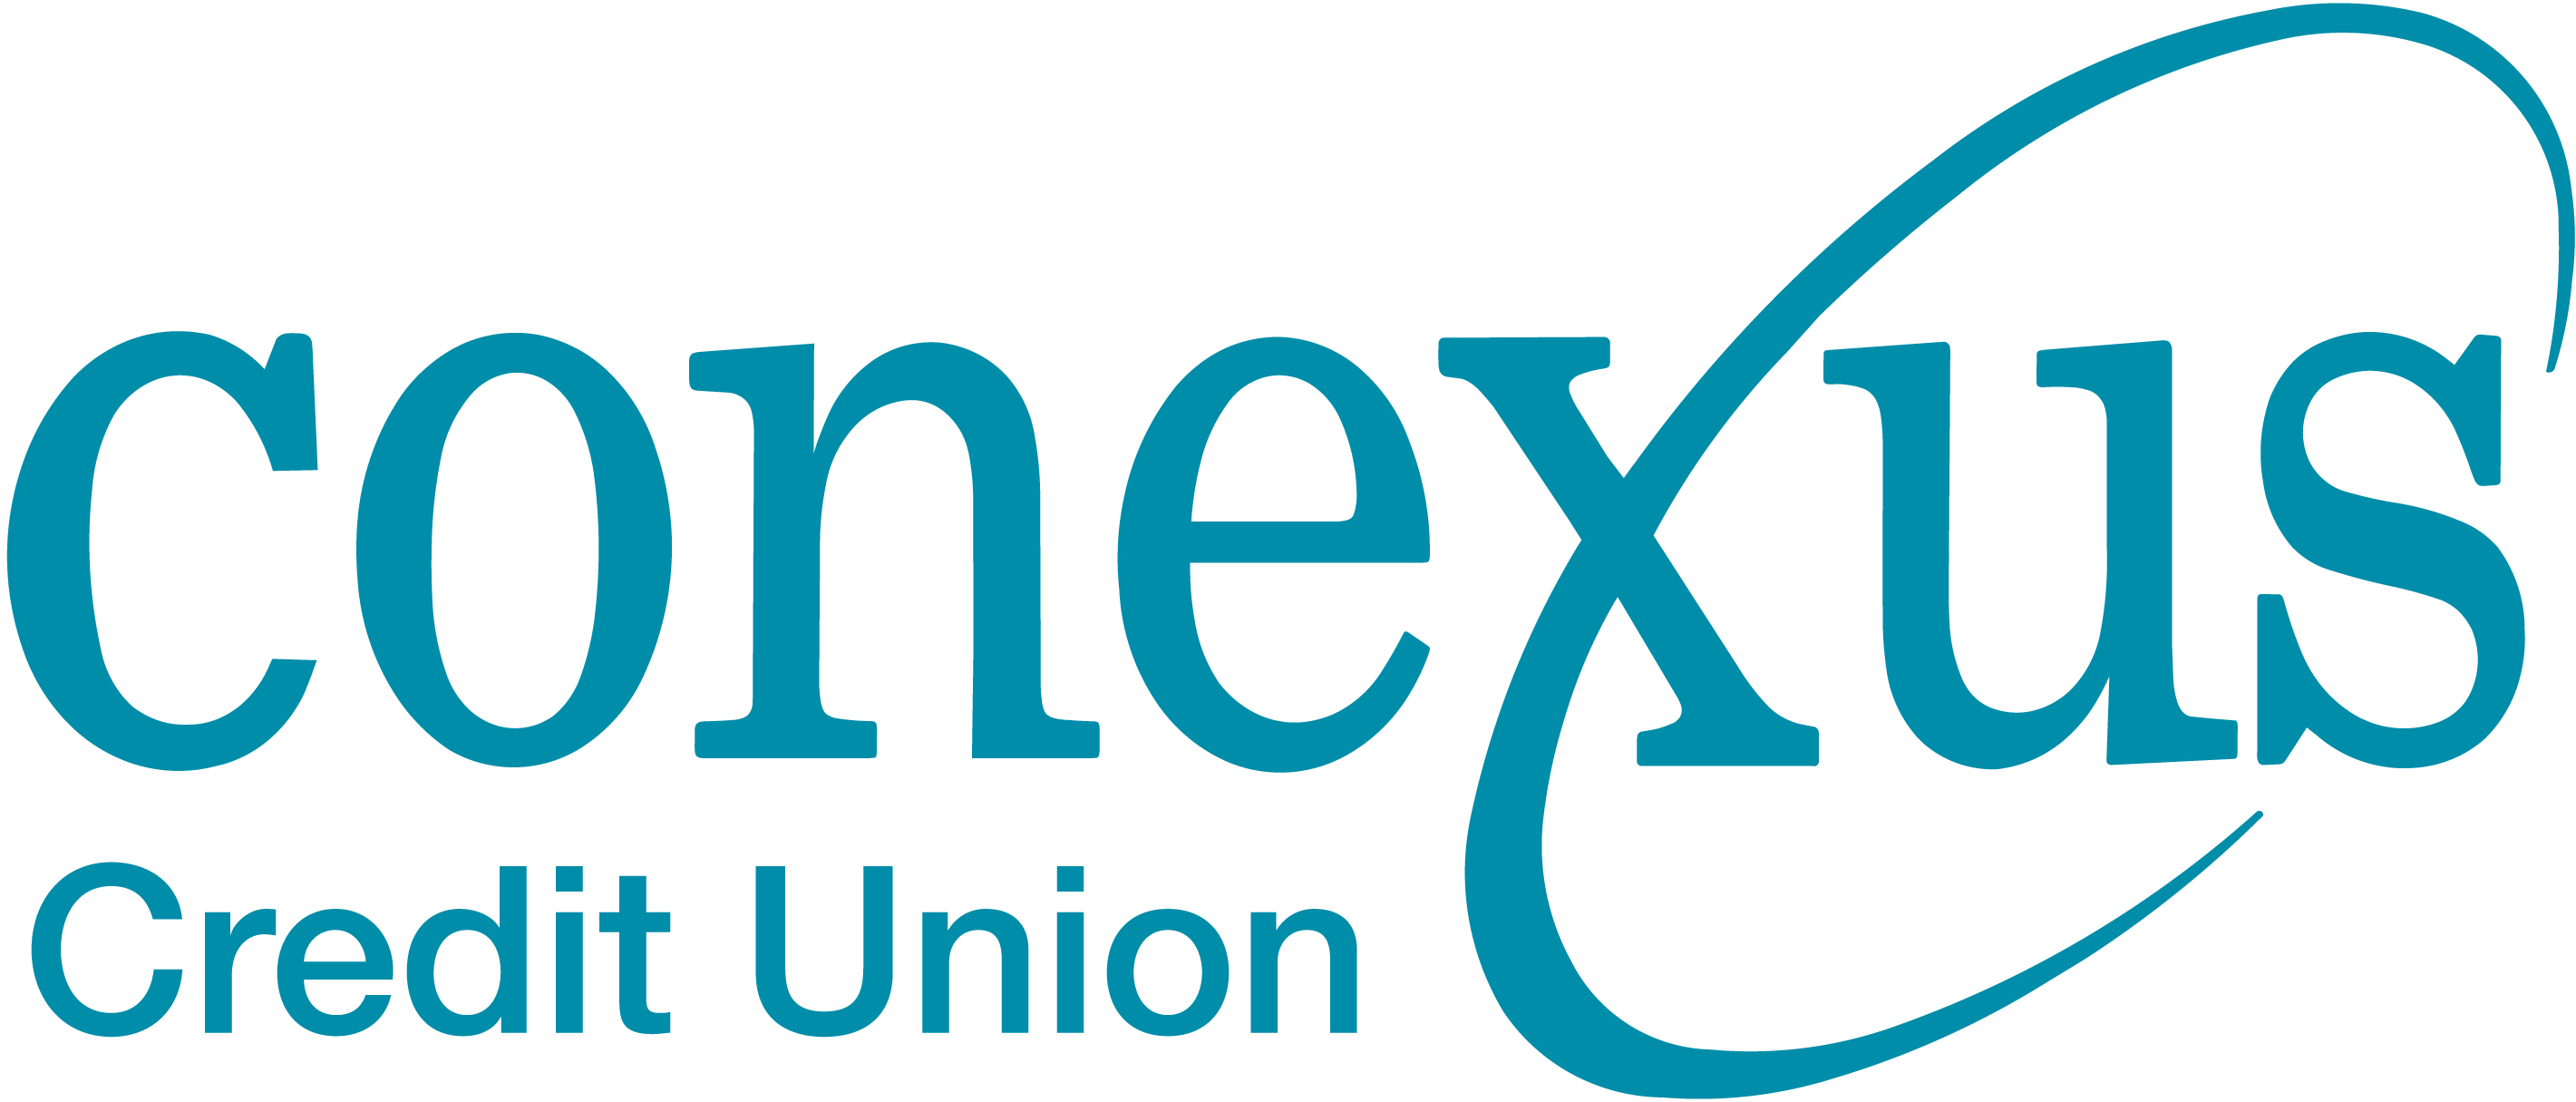 conexus-credit-union